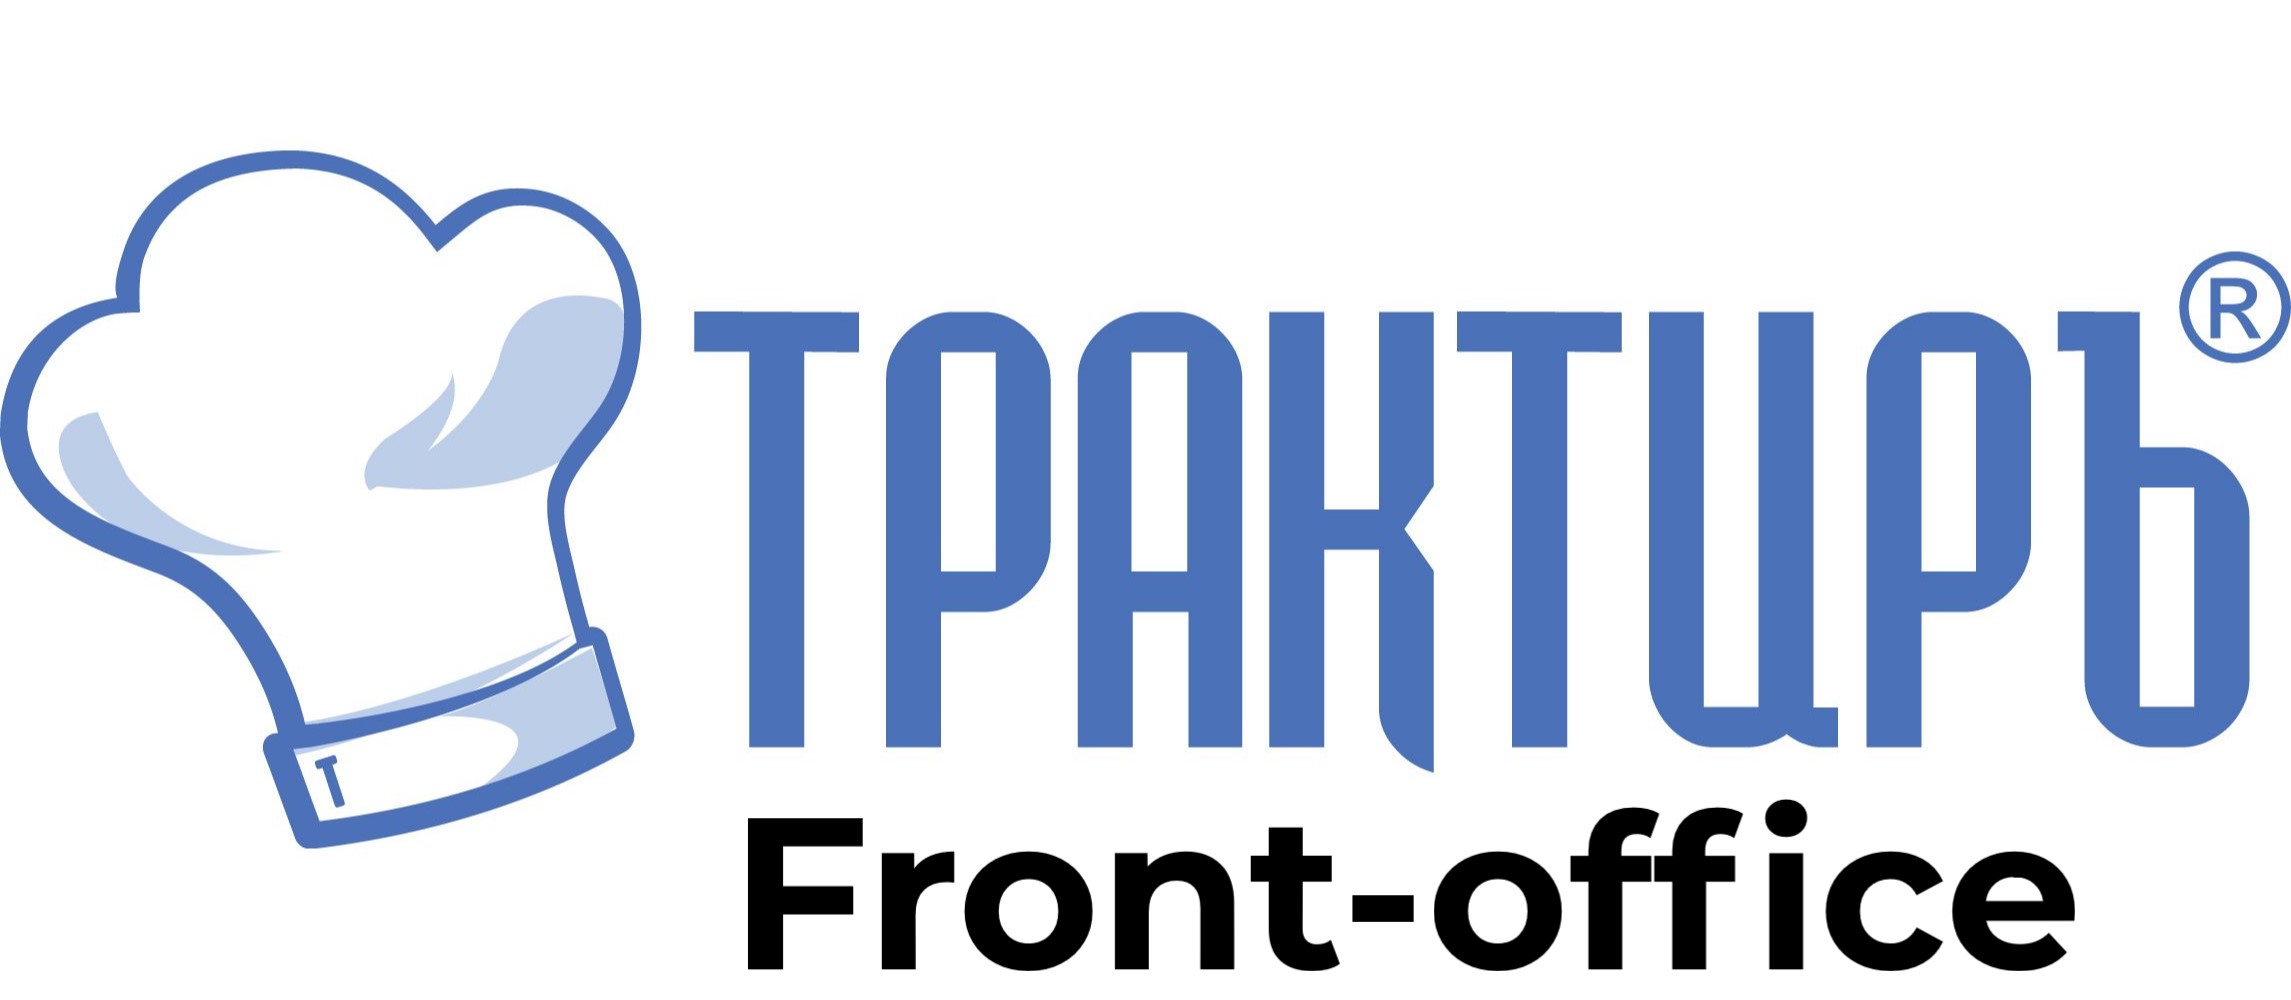 Трактиръ: Front-Office v4. Основная поставка в Томске